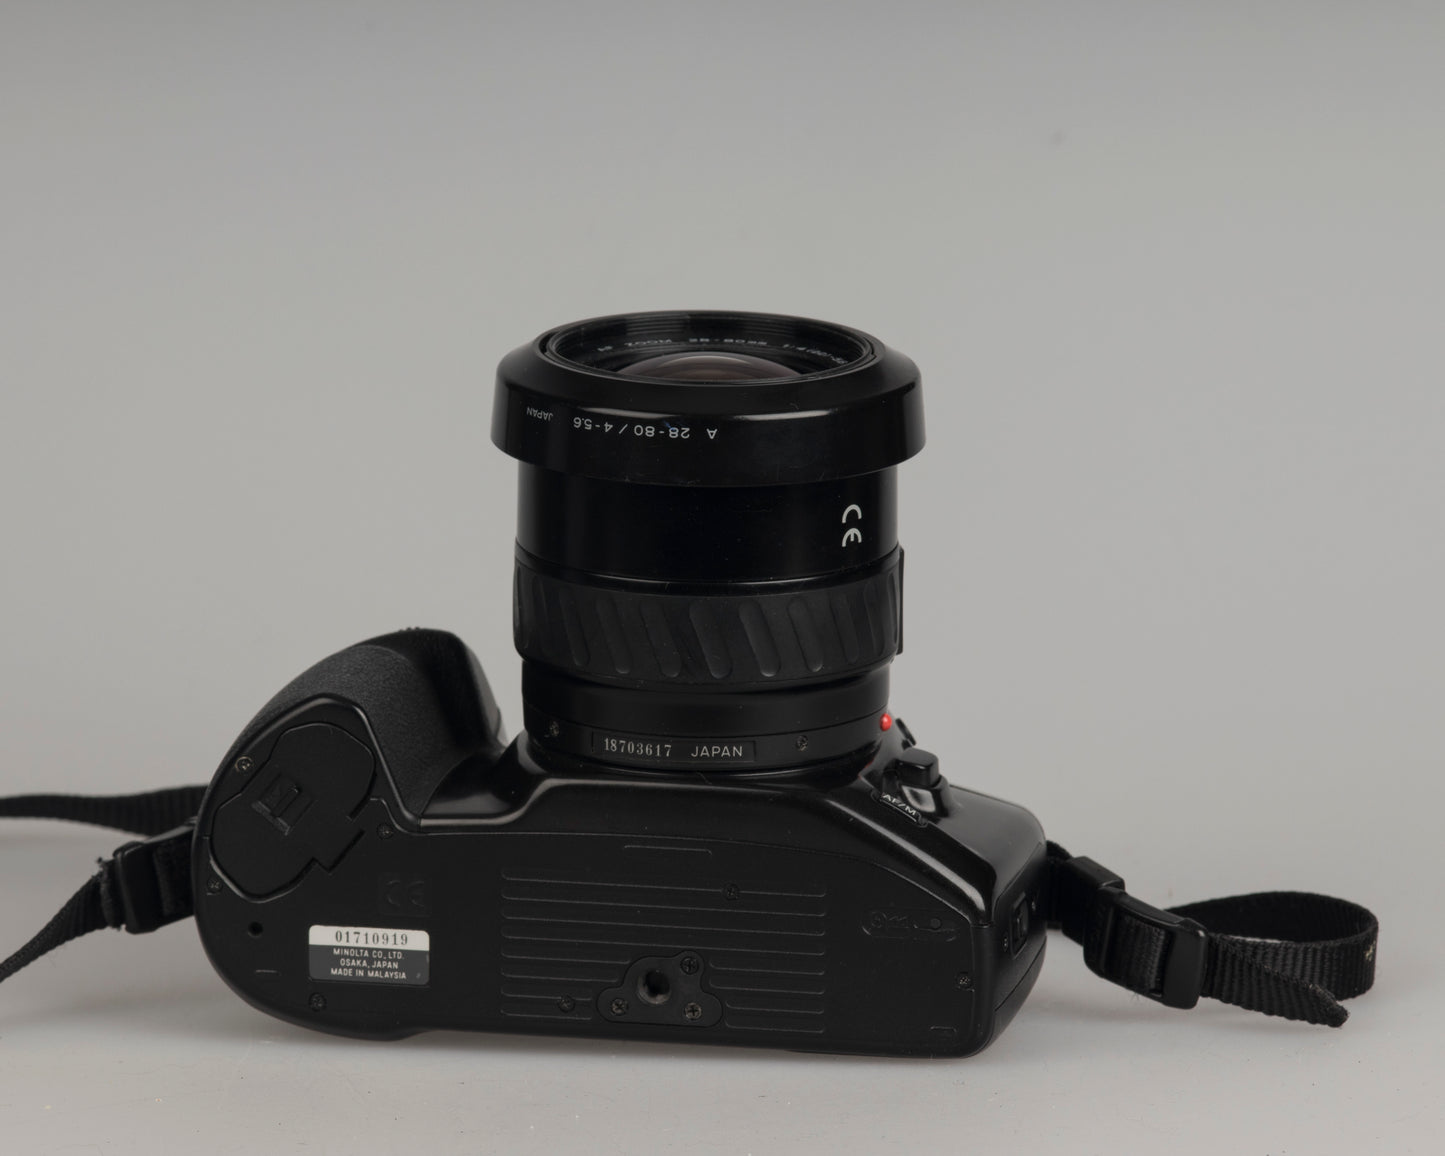 Minolta Maxxum 400si 35mm film SLR camera featuring a 28-80mm lens; bottom view